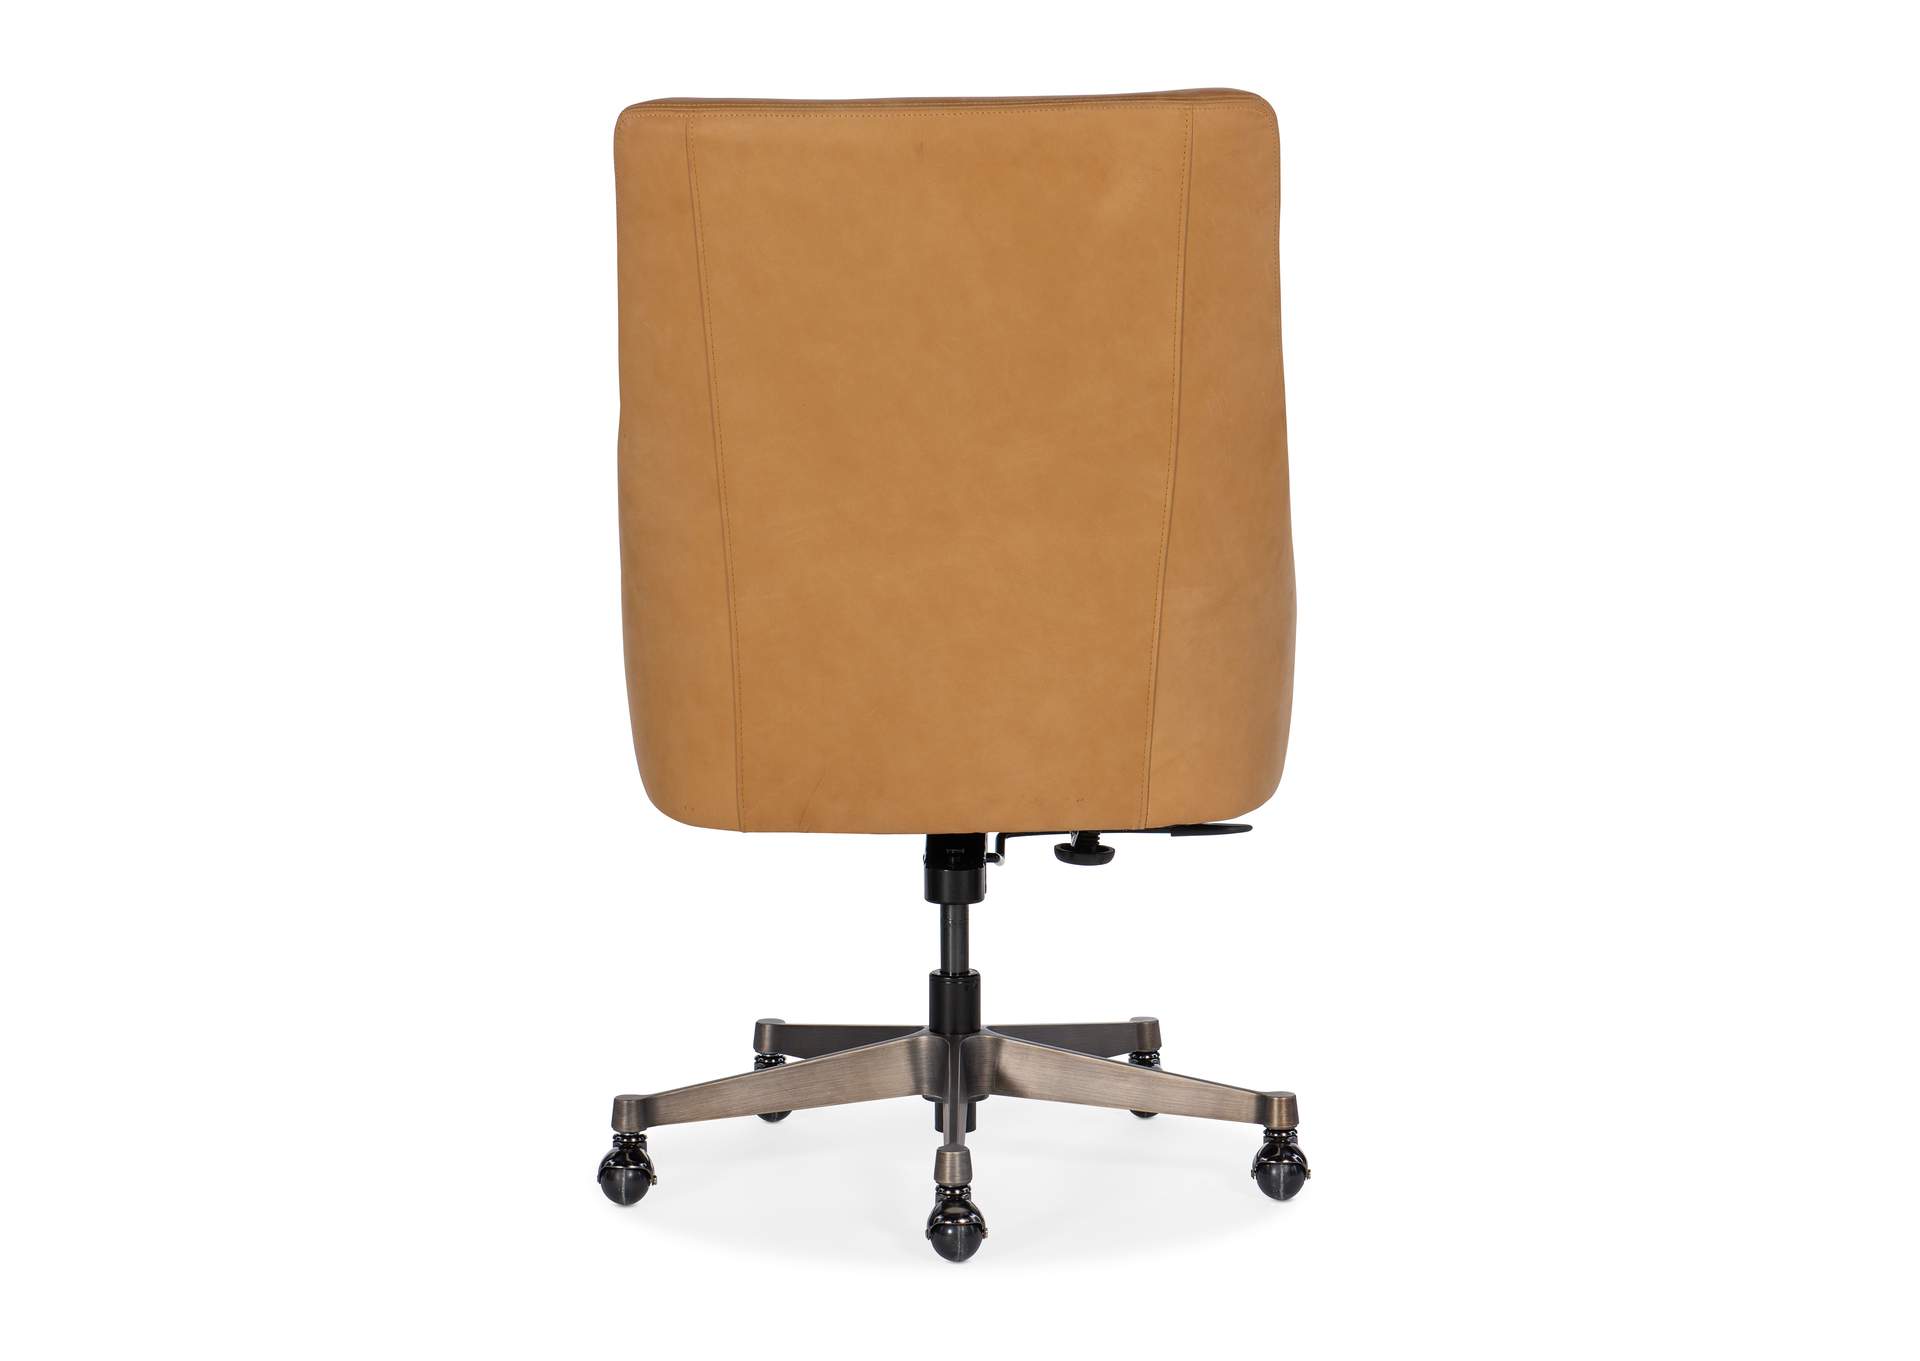 Paula Executive Swivel Tilt Chair,Hooker Furniture